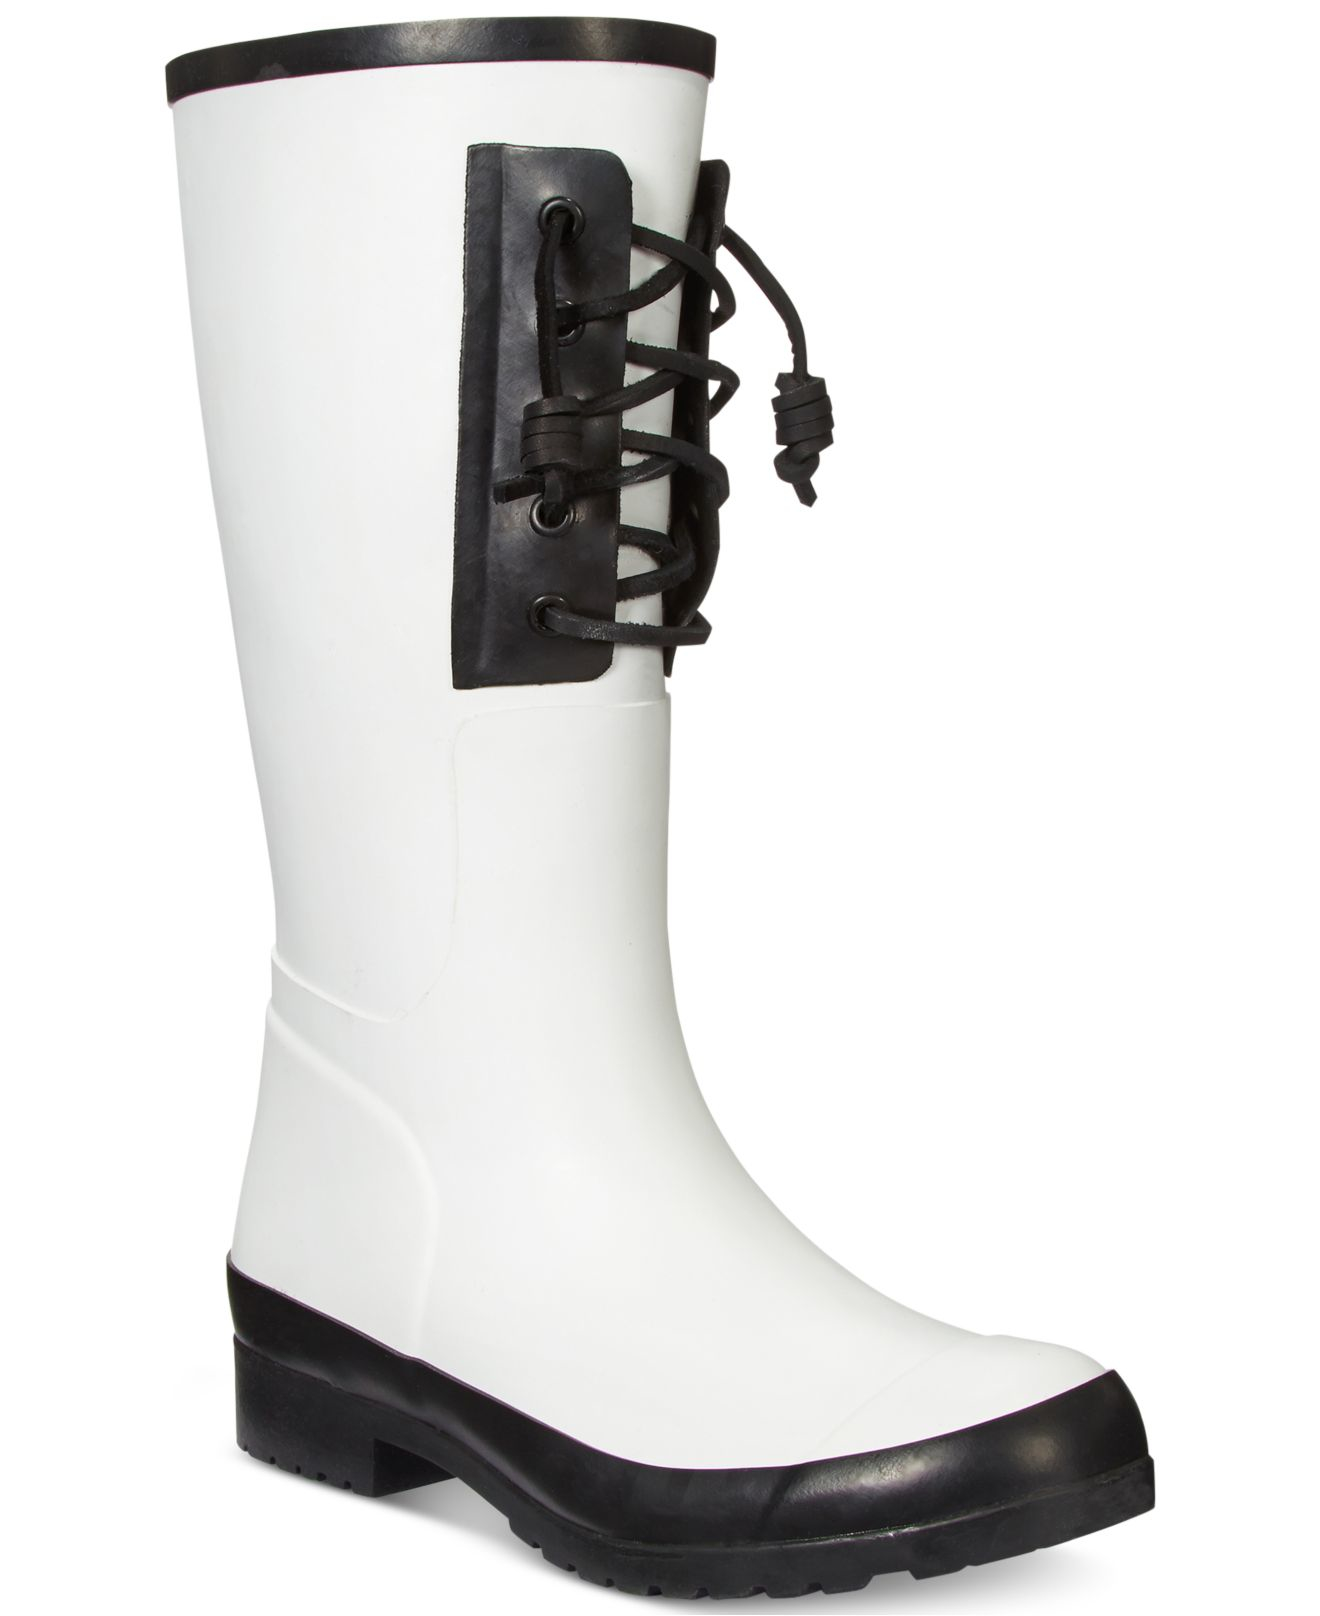 white sperry rain boots